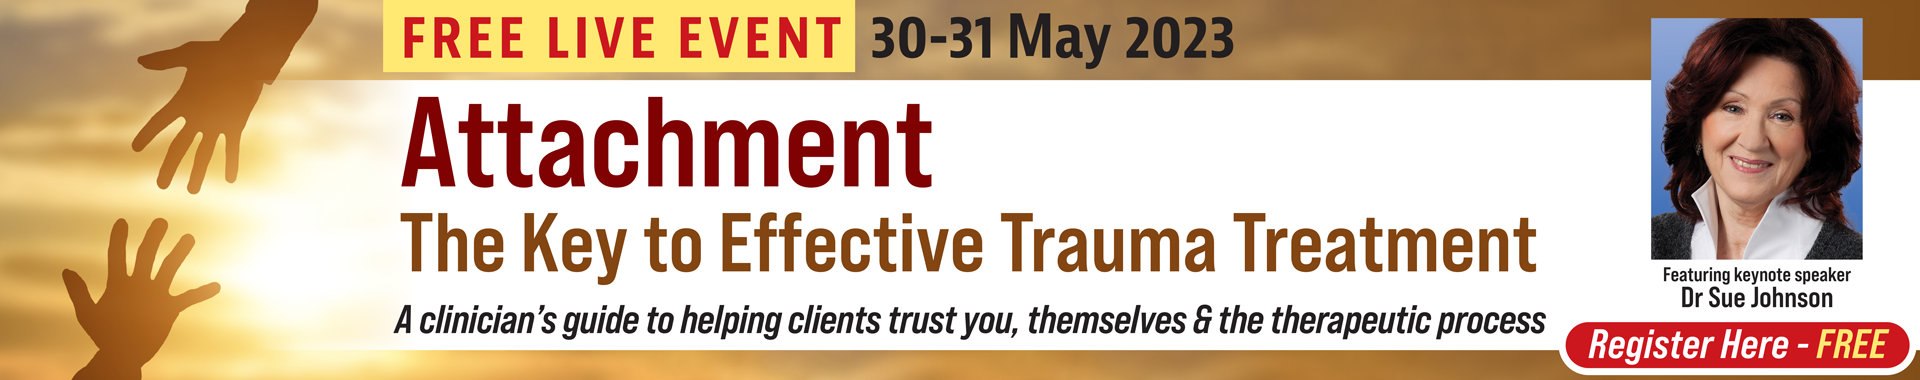 Attachment: The Key to Effective Trauma Treatment